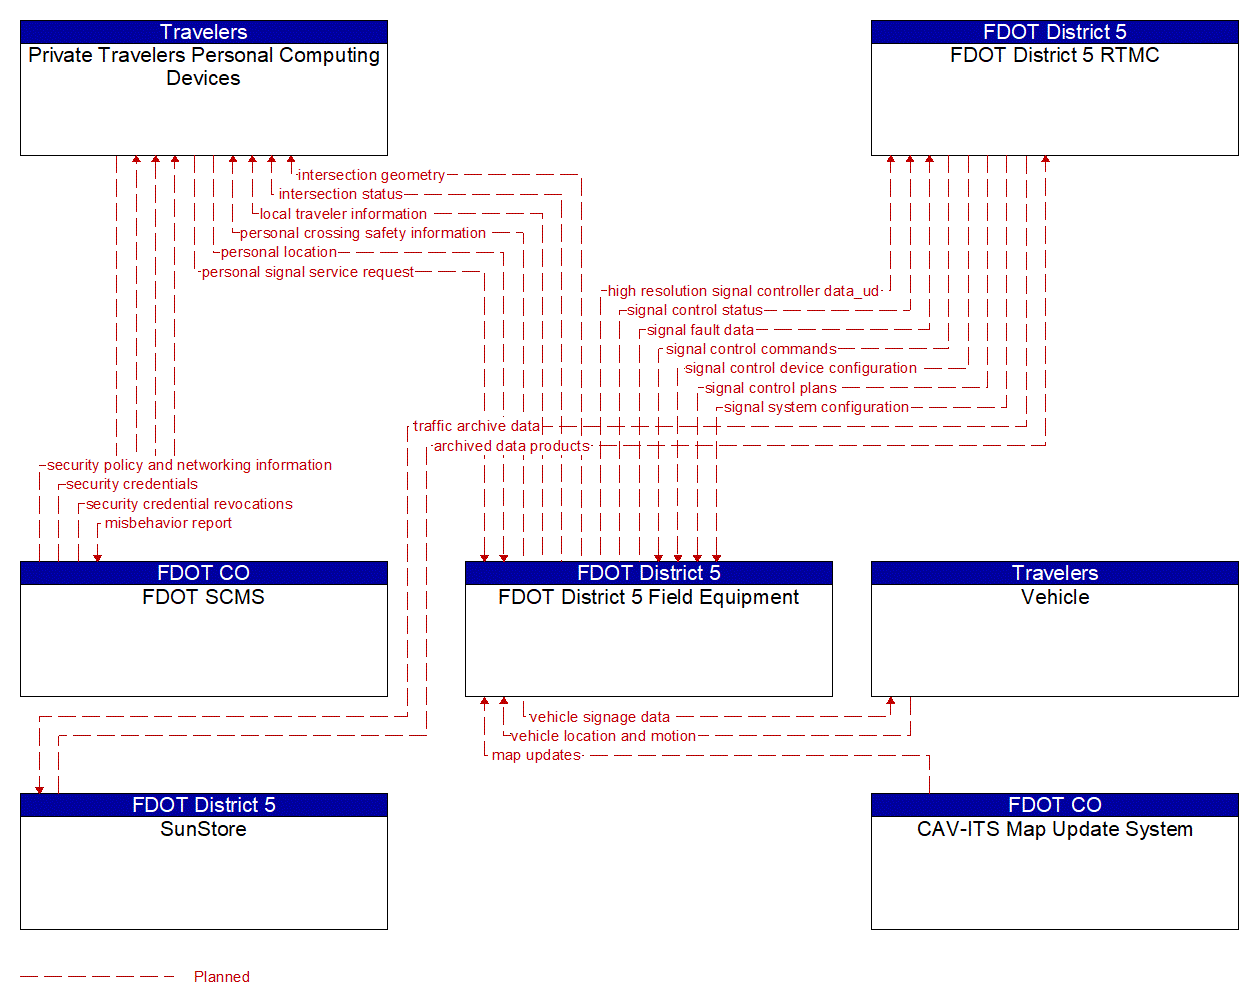 Project Information Flow Diagram: LYNX